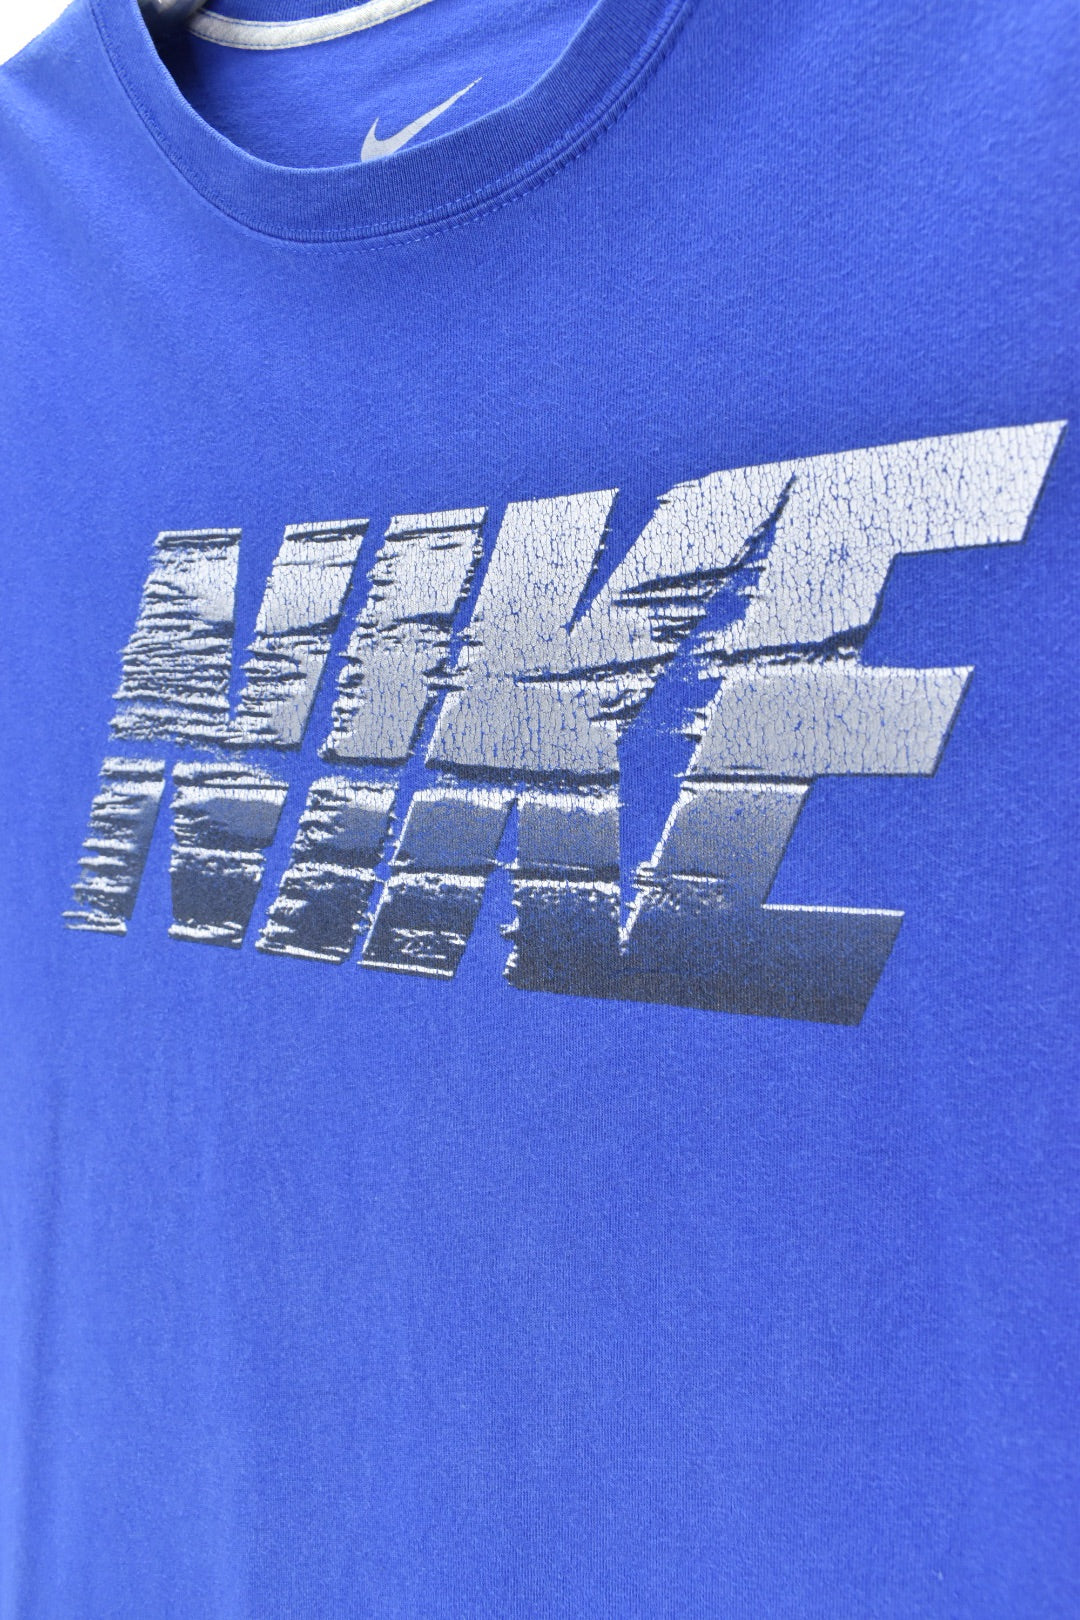 VINTAGE NIKE BLUE T-SHIRT | XL NIKE